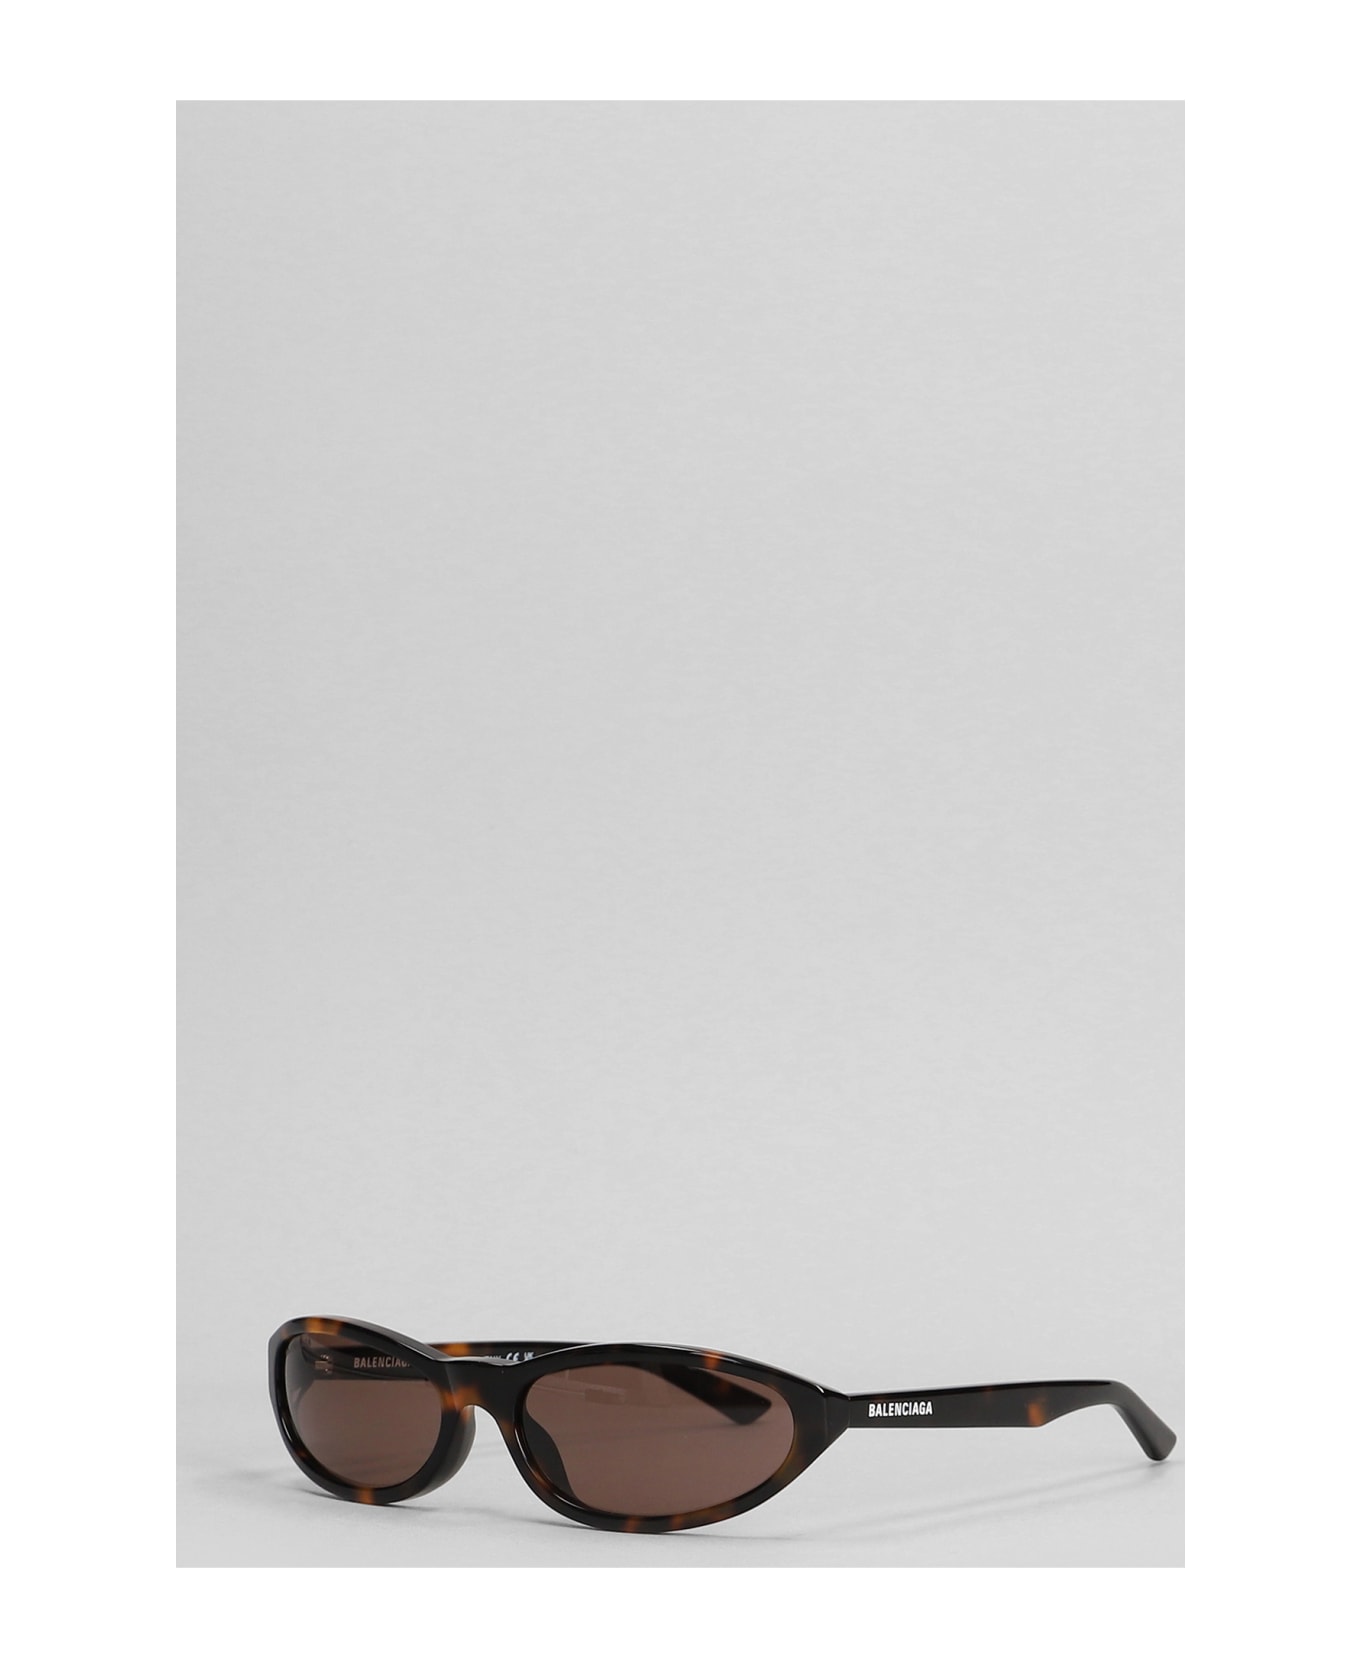 Balenciaga Neo Round Sunglasses In Brown Acetate - brown